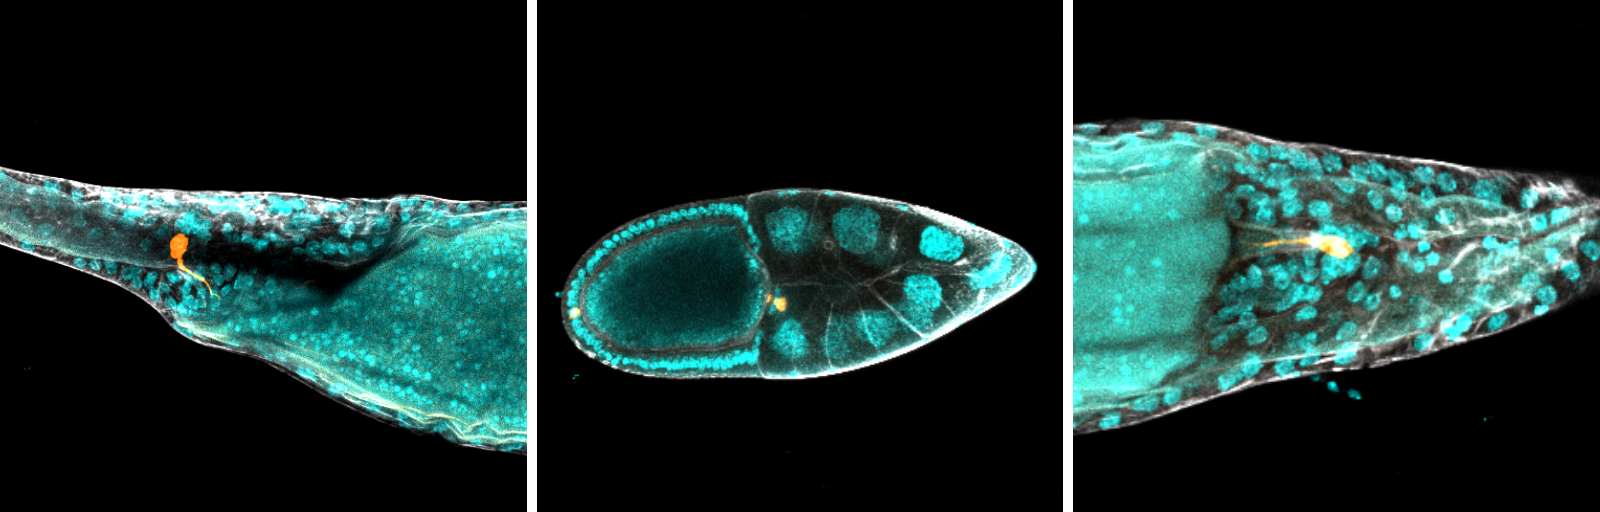 Drosophila Embryo crdit Louis Prahl, Postdoc UPenn